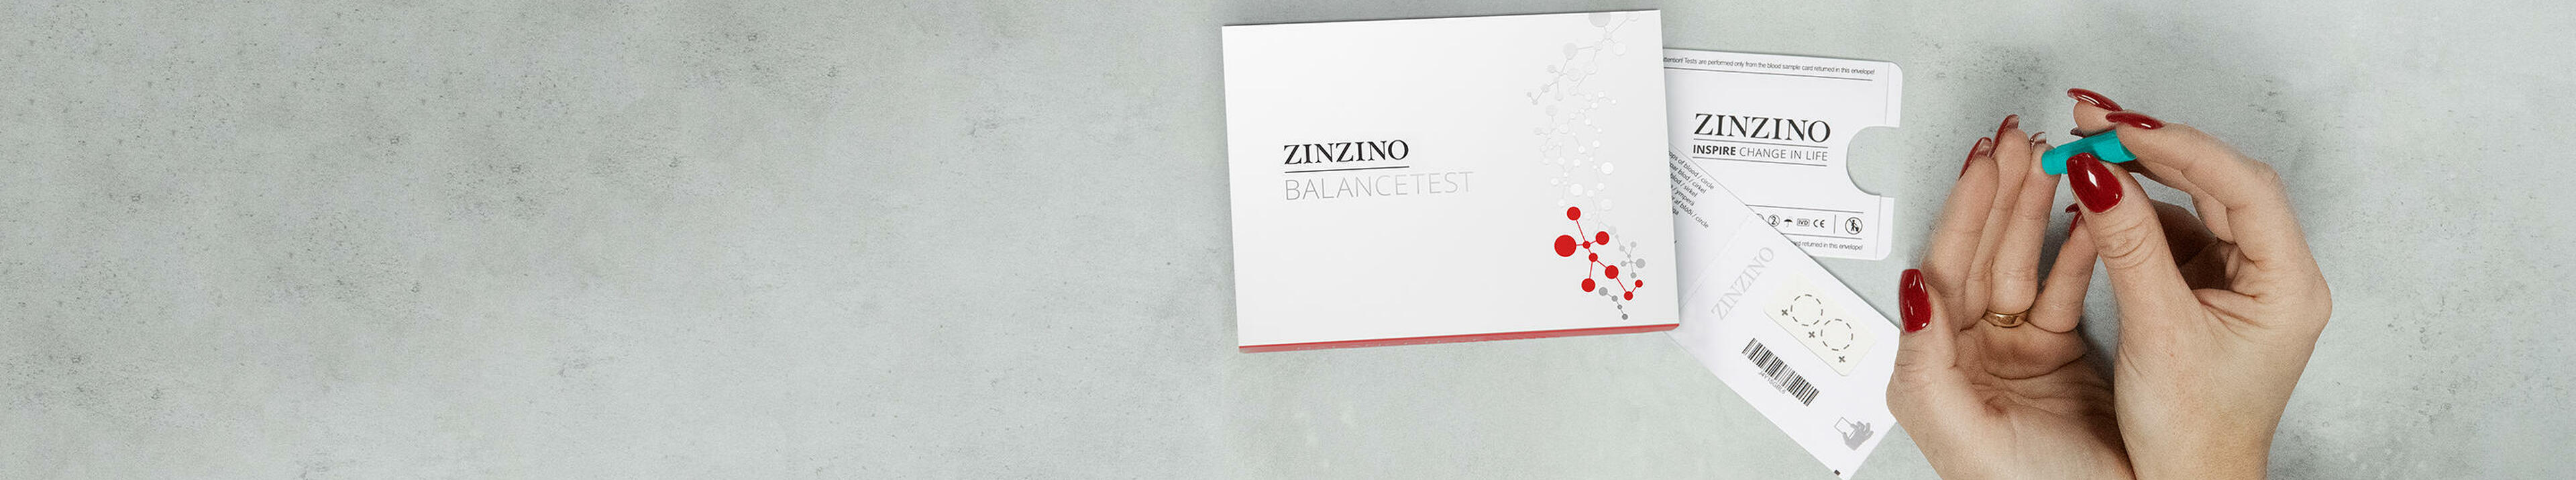 Results zinzino test ZinZino